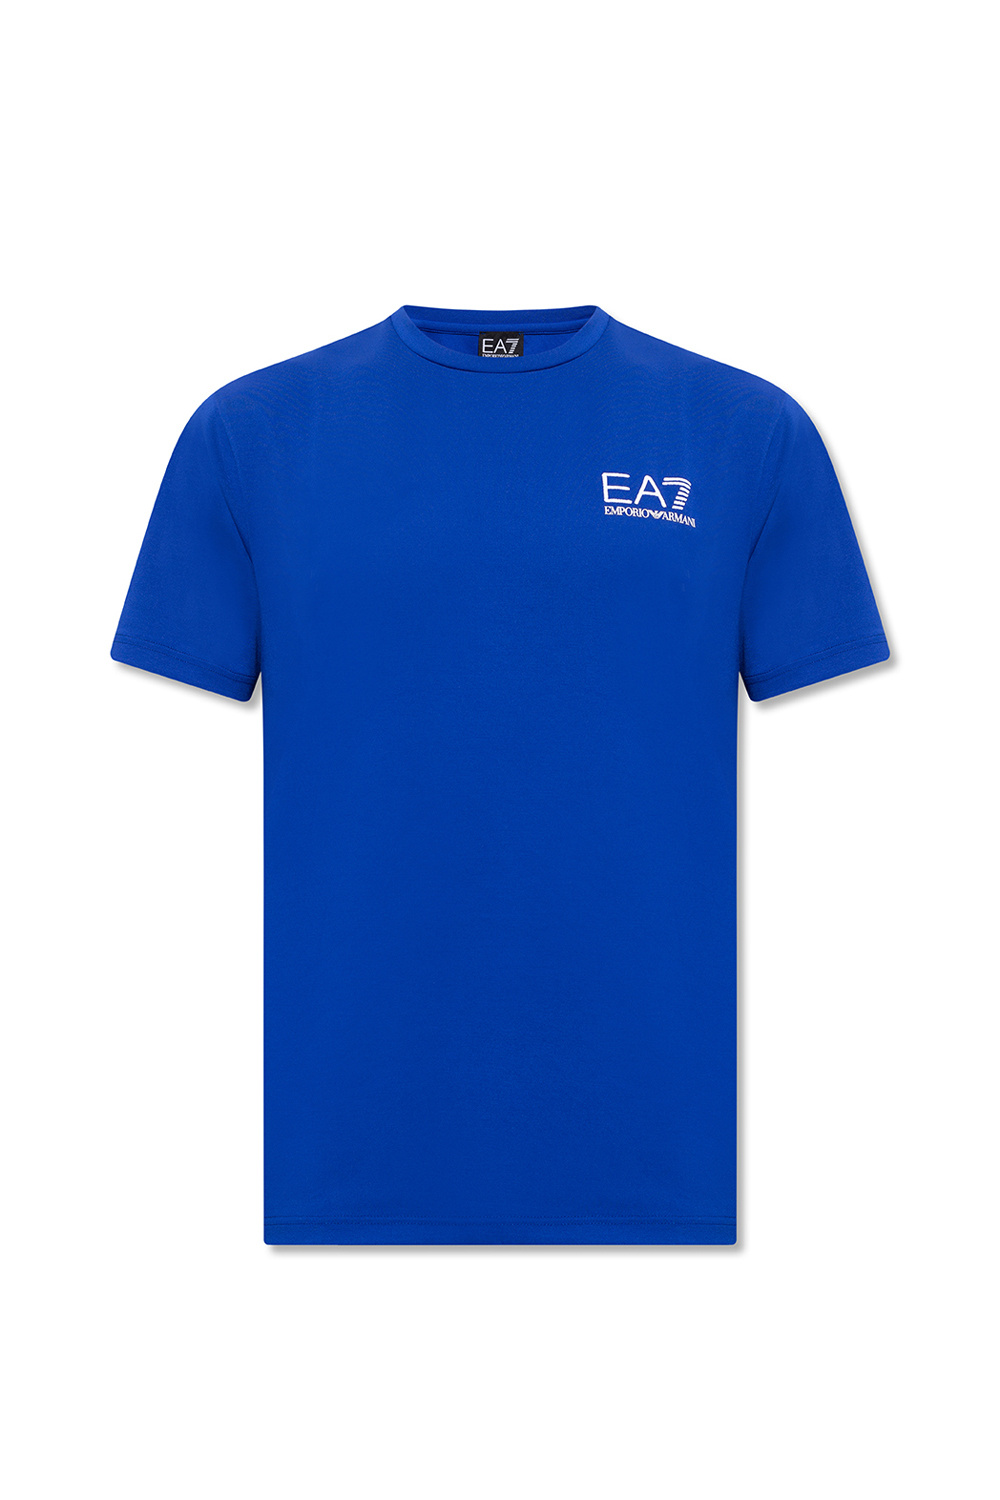 magnifiek Uitschakelen Kindercentrum EA7 Emporio Armani Logo T-shirt | Men's Clothing | Vitkac